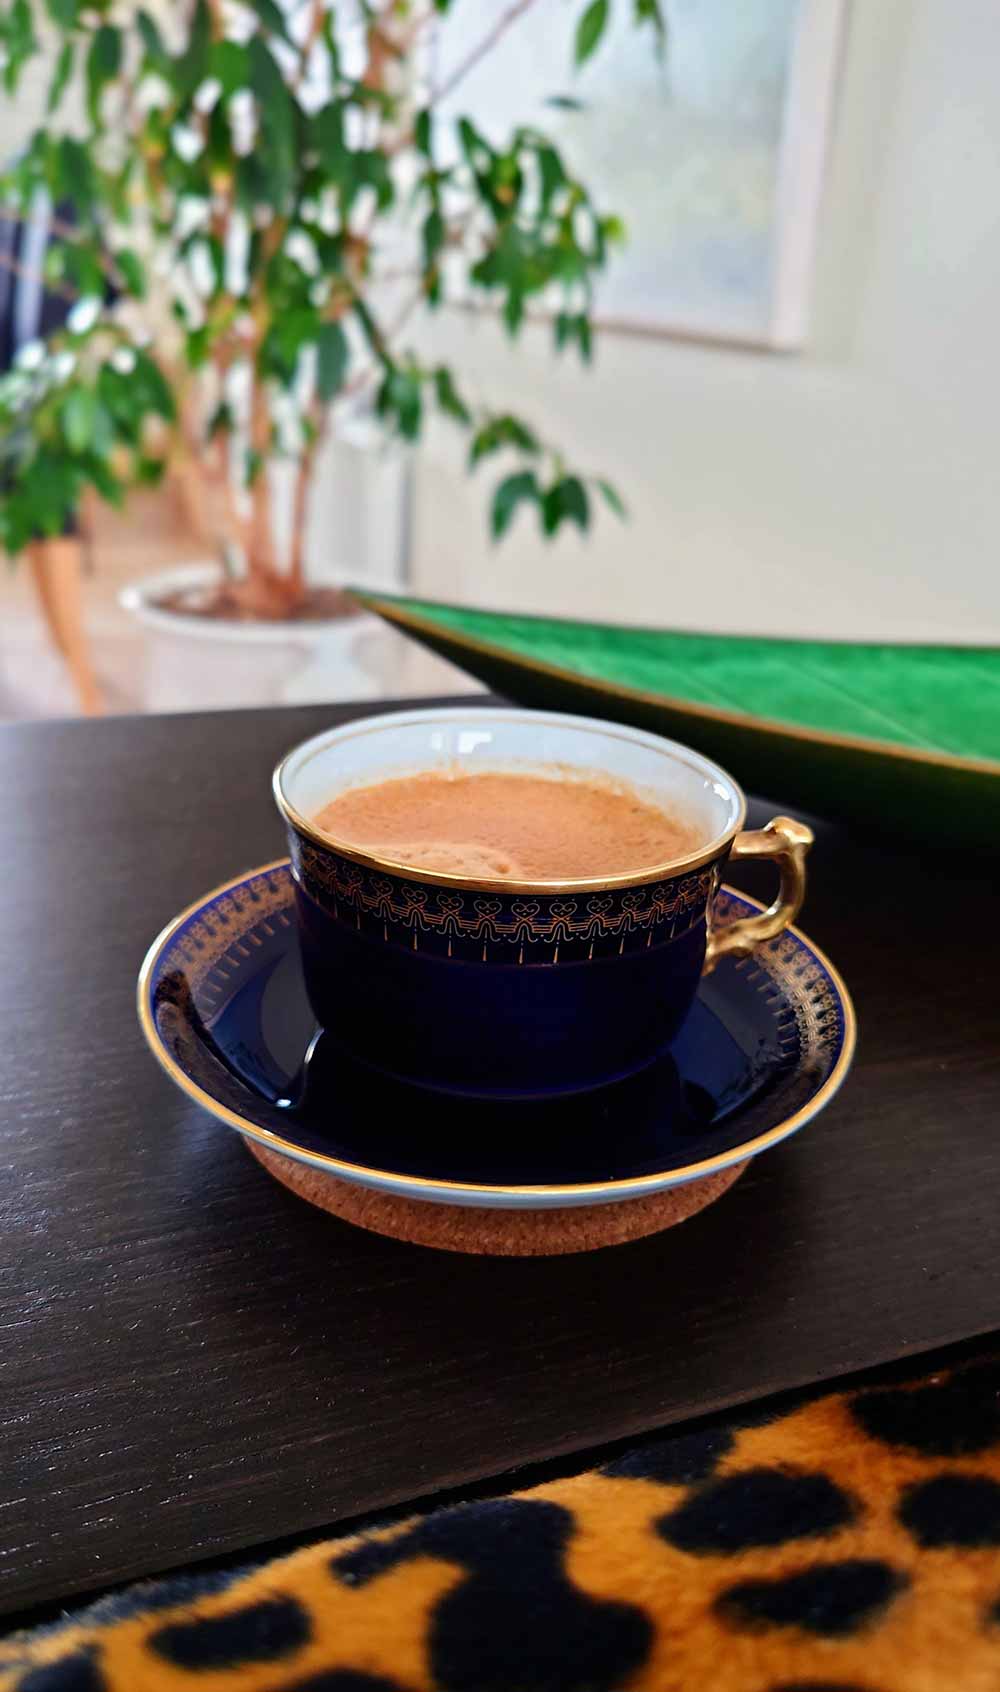 En dubbel espresso i en kopp på ett sidobord